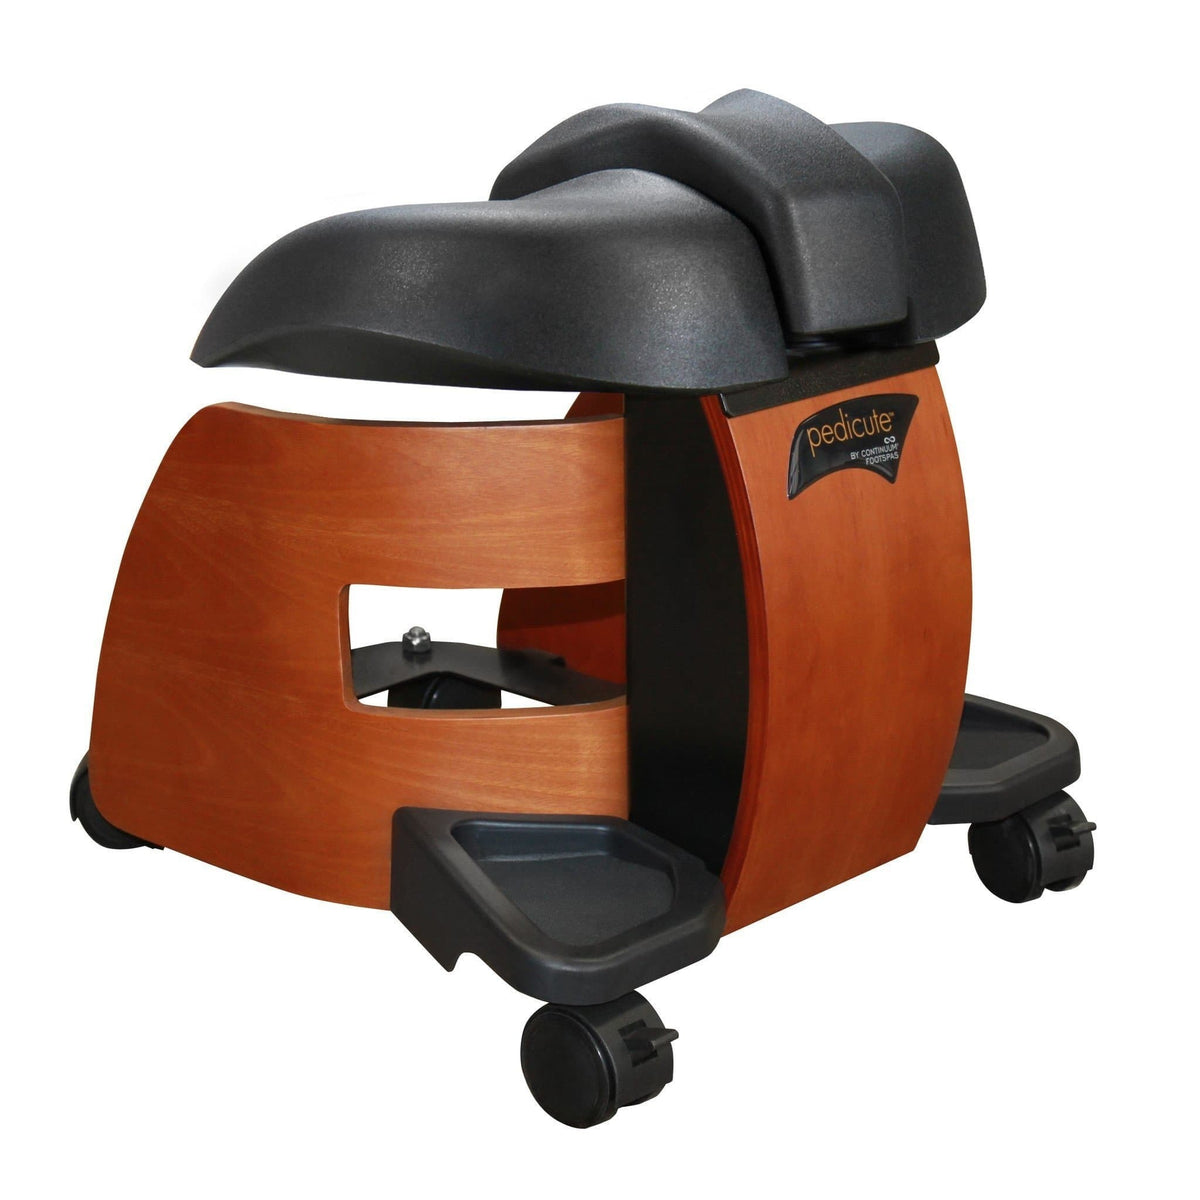 Continuum Continuum Pedicute Portable Spa Pedicure &amp; Spa Chairs - ChairsThatGive